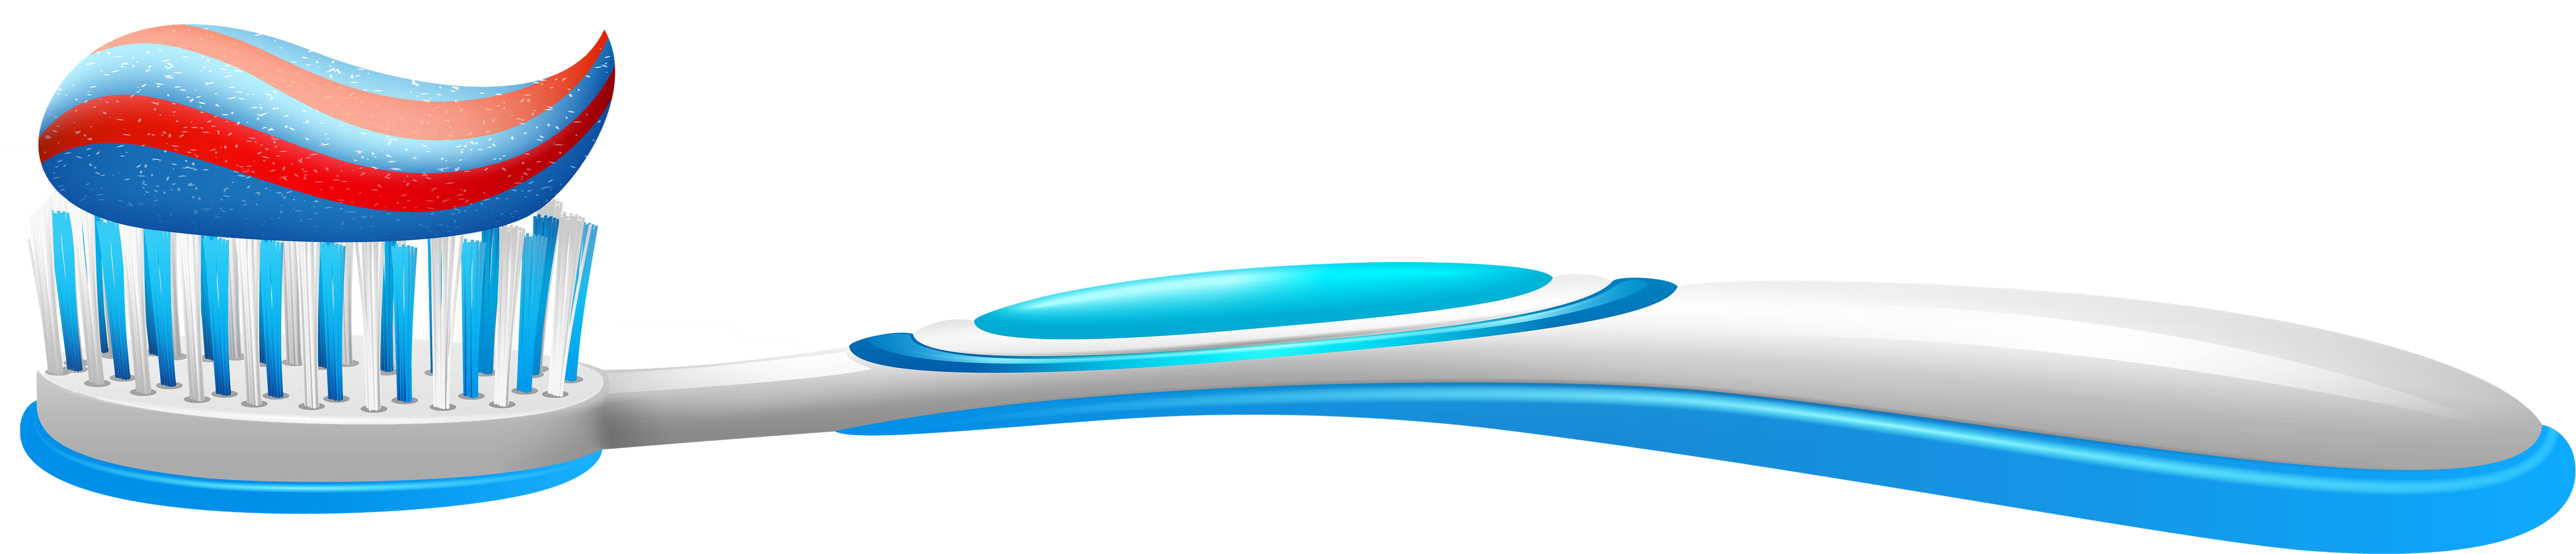 Toothbrush Png 4551 X 979